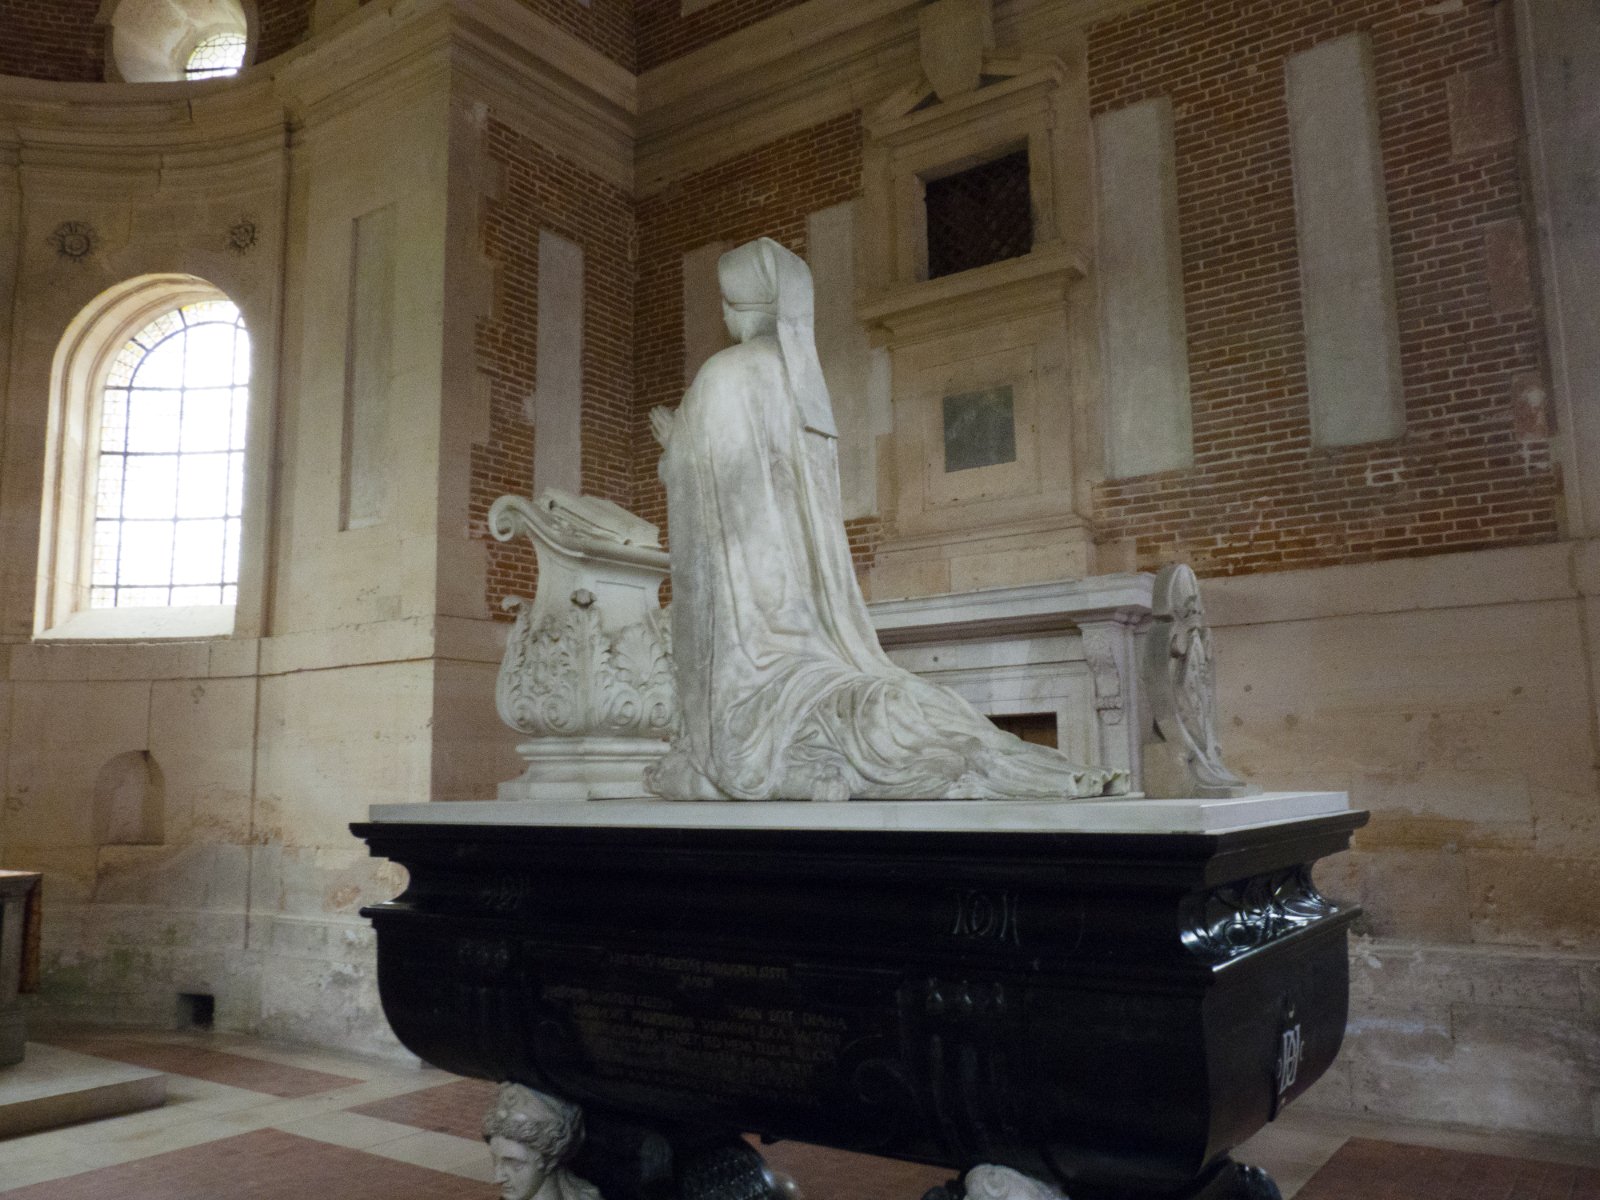 1566 - Chateau d'Anet - tomb of Diane de Poitiers